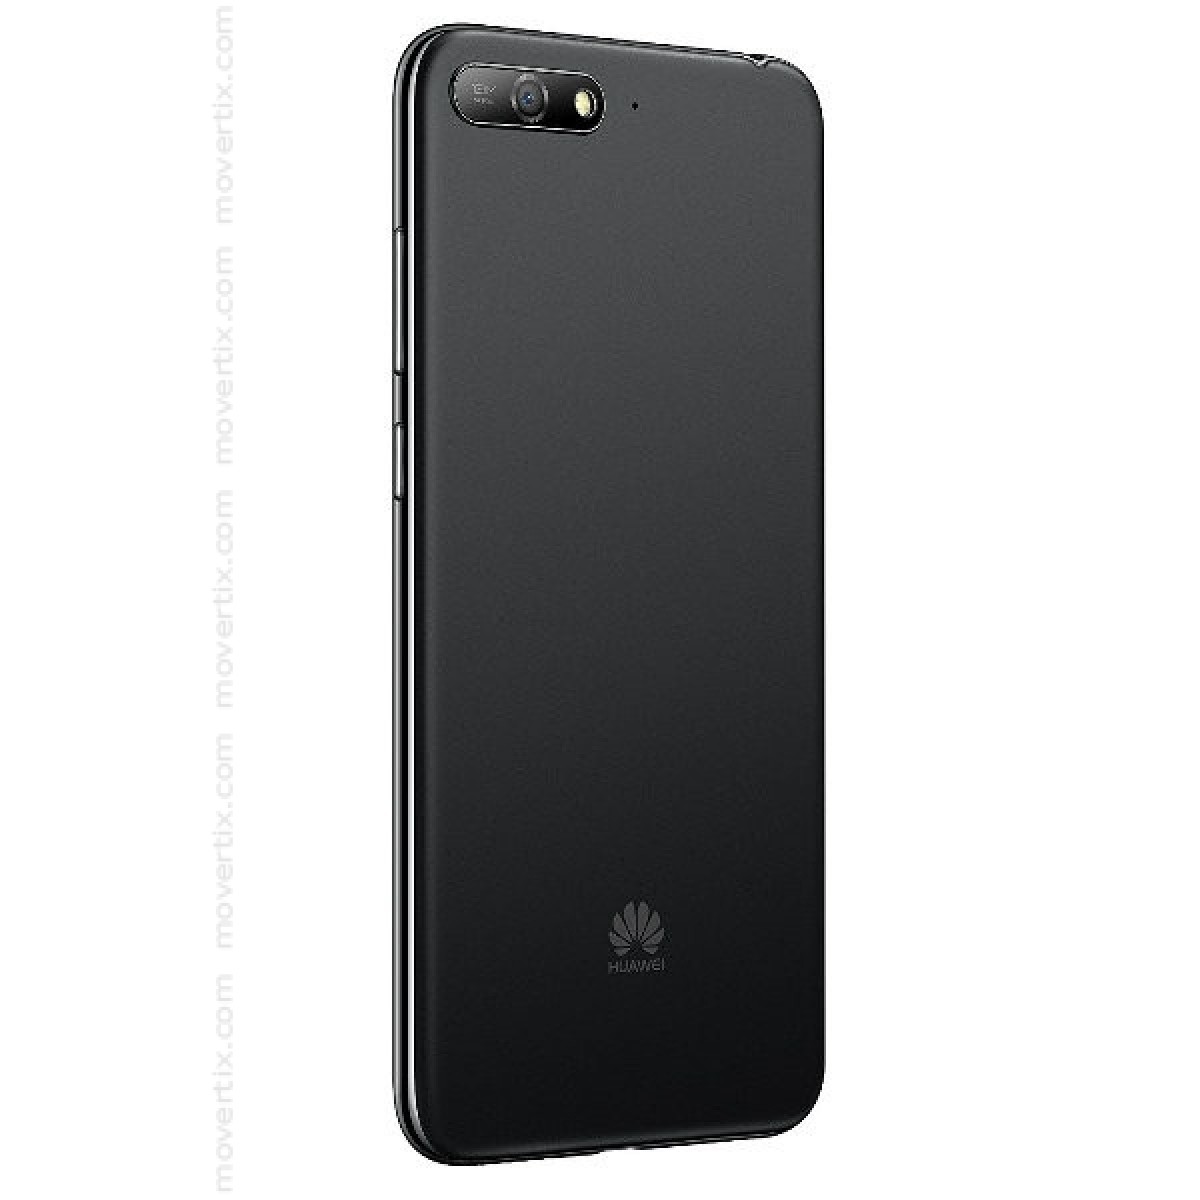 Huawei Y6 2018 Dual Sim Black 16gb And 2gb Ram 6901443225187